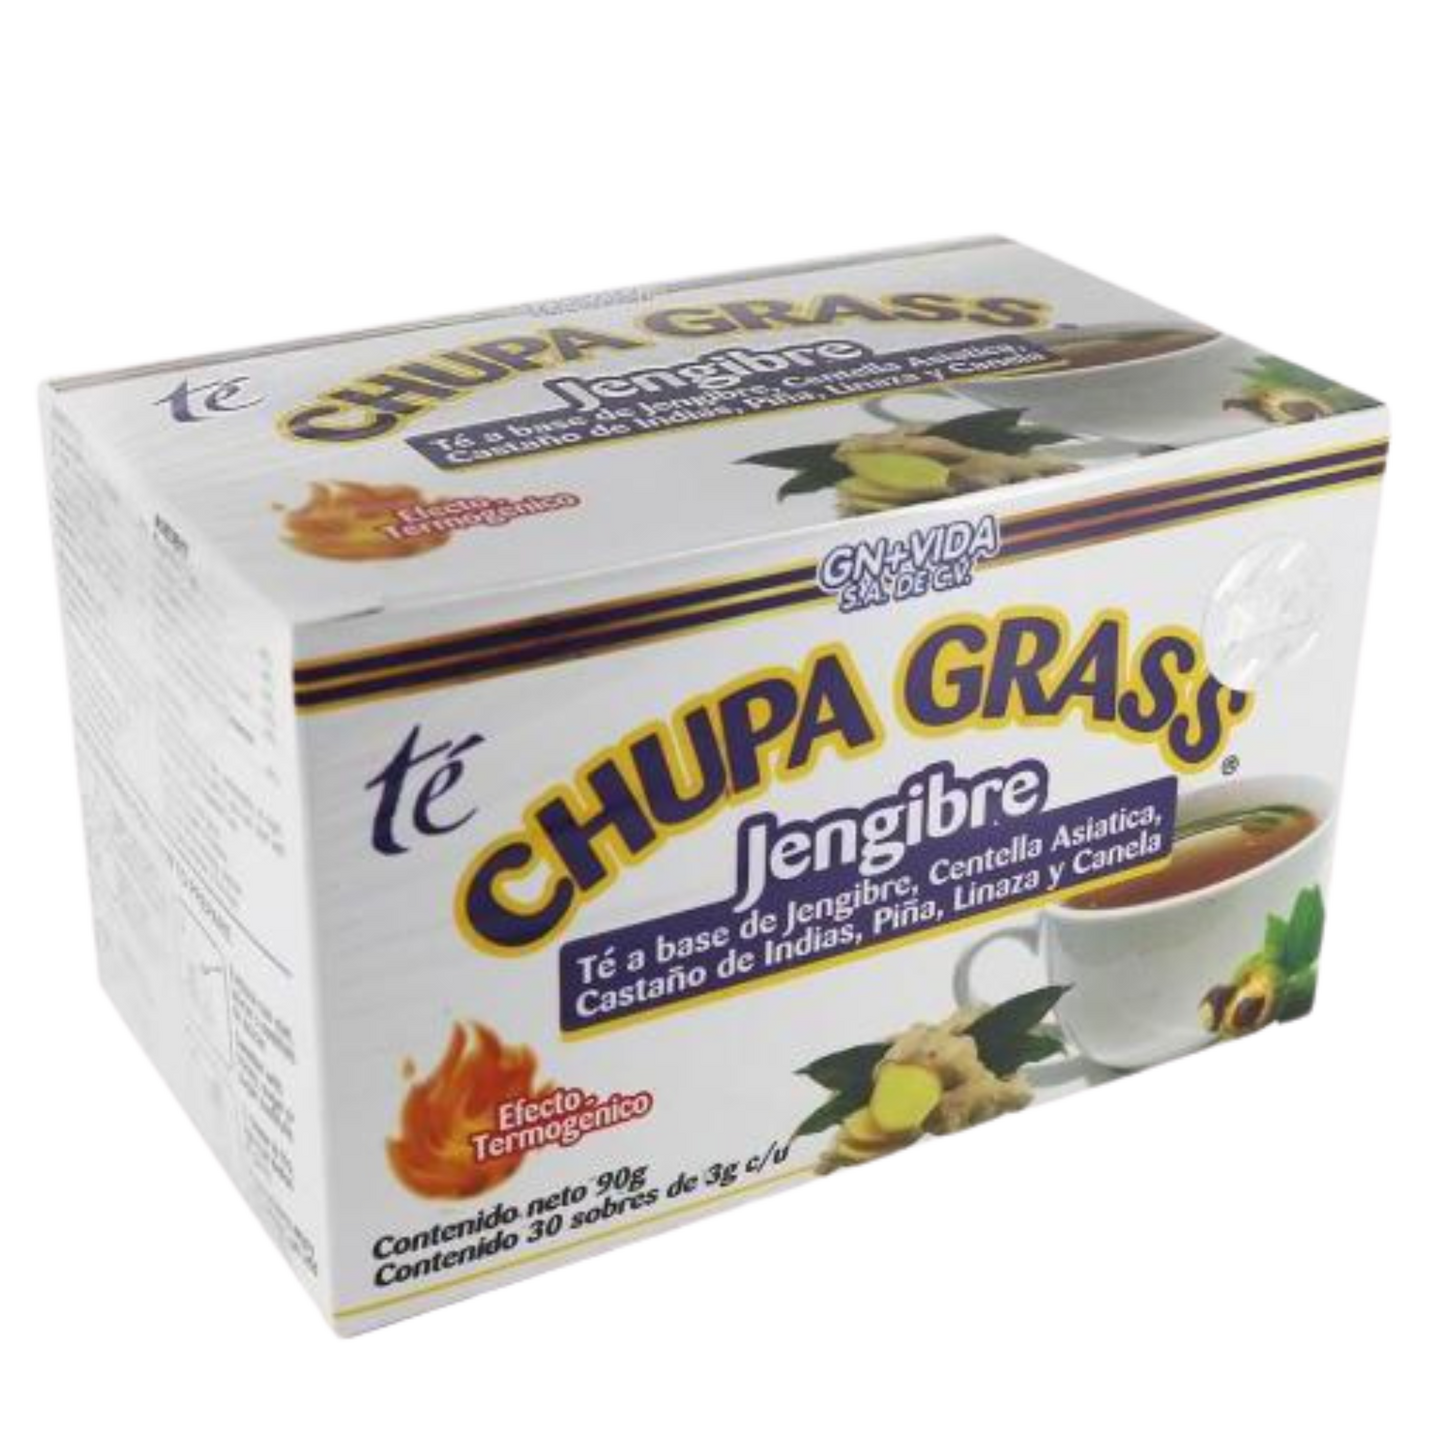 Té Chupa Grass